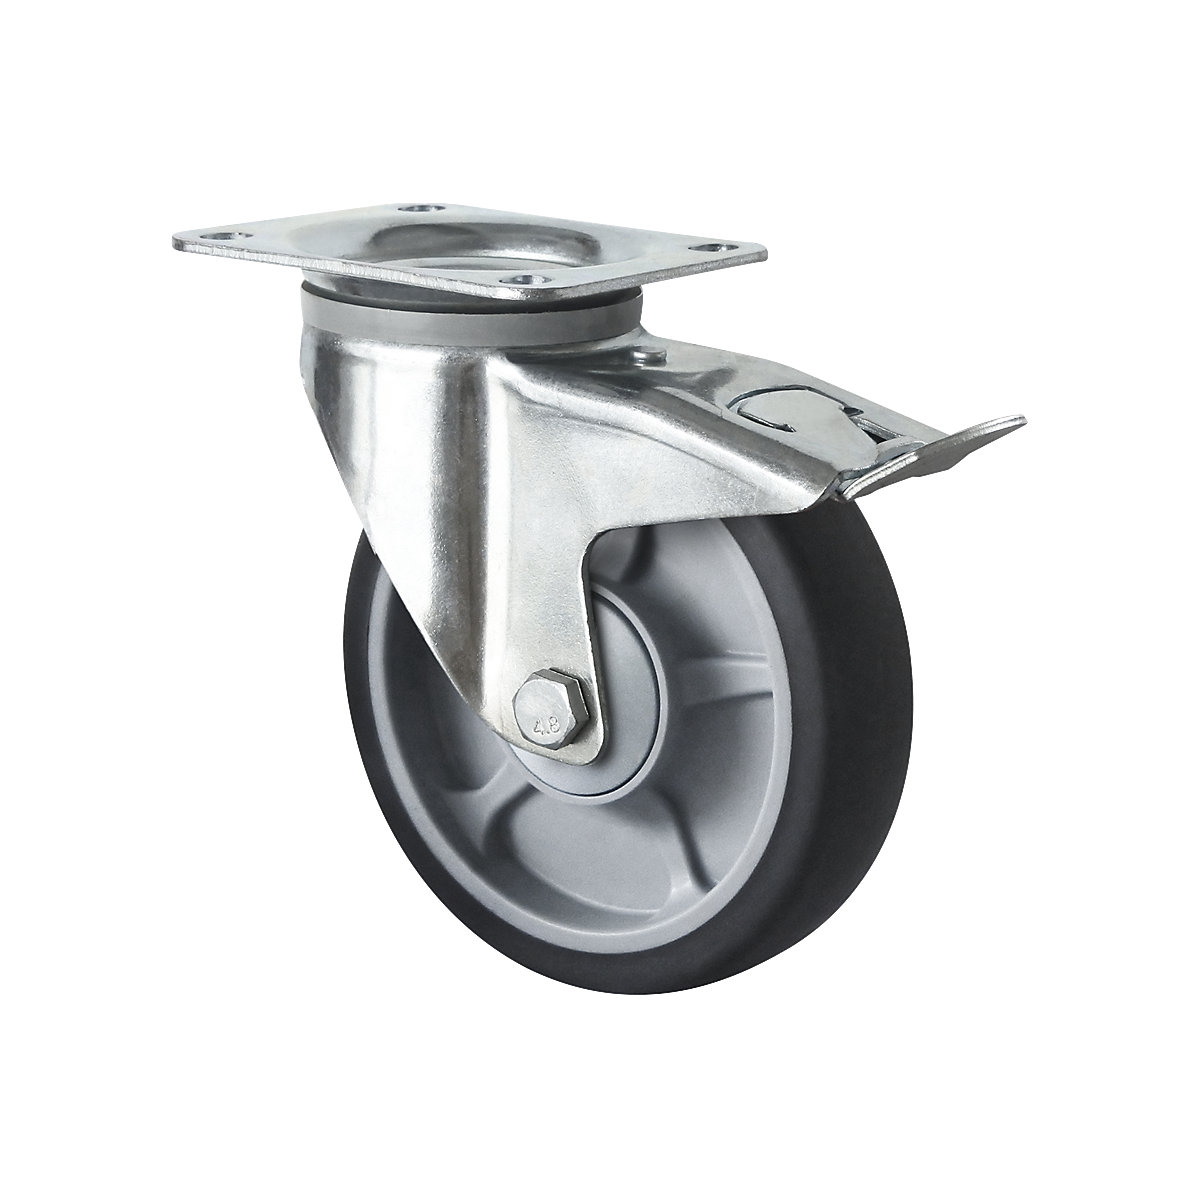 Neumático de TPE sobre llanta de PP, a partir de 2 unid. – eurokraft basic, Ø x anchura de rueda 100 x 32 mm, rueda de maniobra con freno doble-1